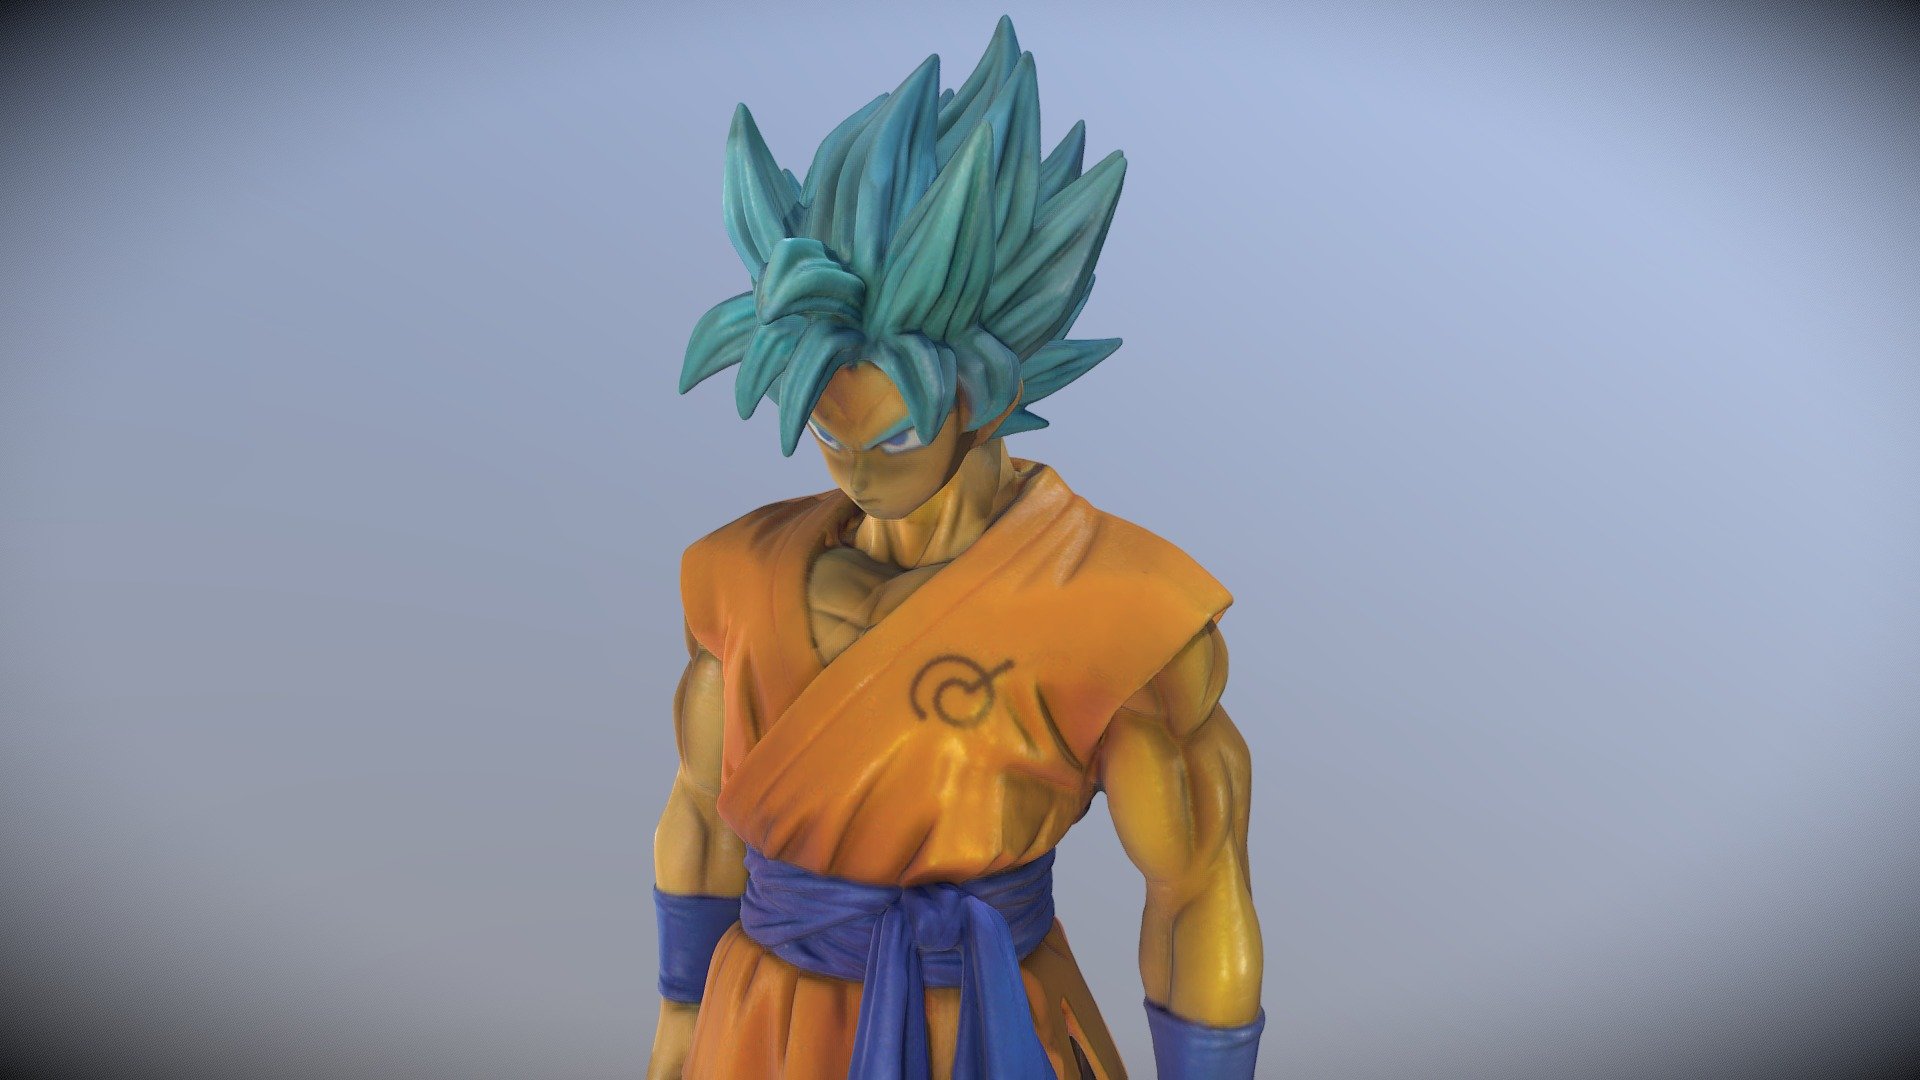 Goku Blue Hair Costume for Kids - wide 5